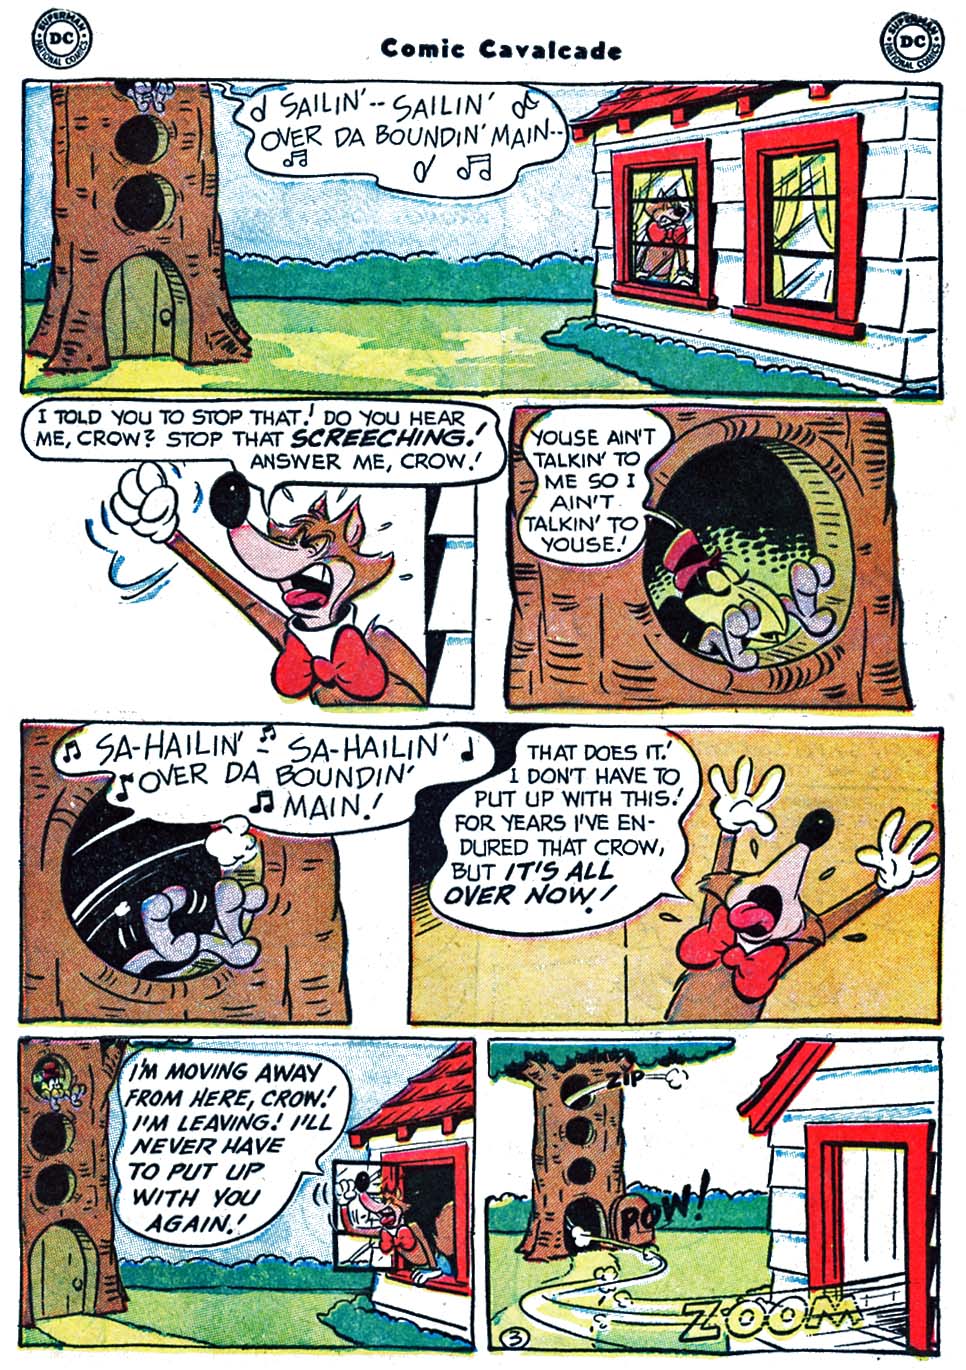 Comic Cavalcade issue 60 - Page 5